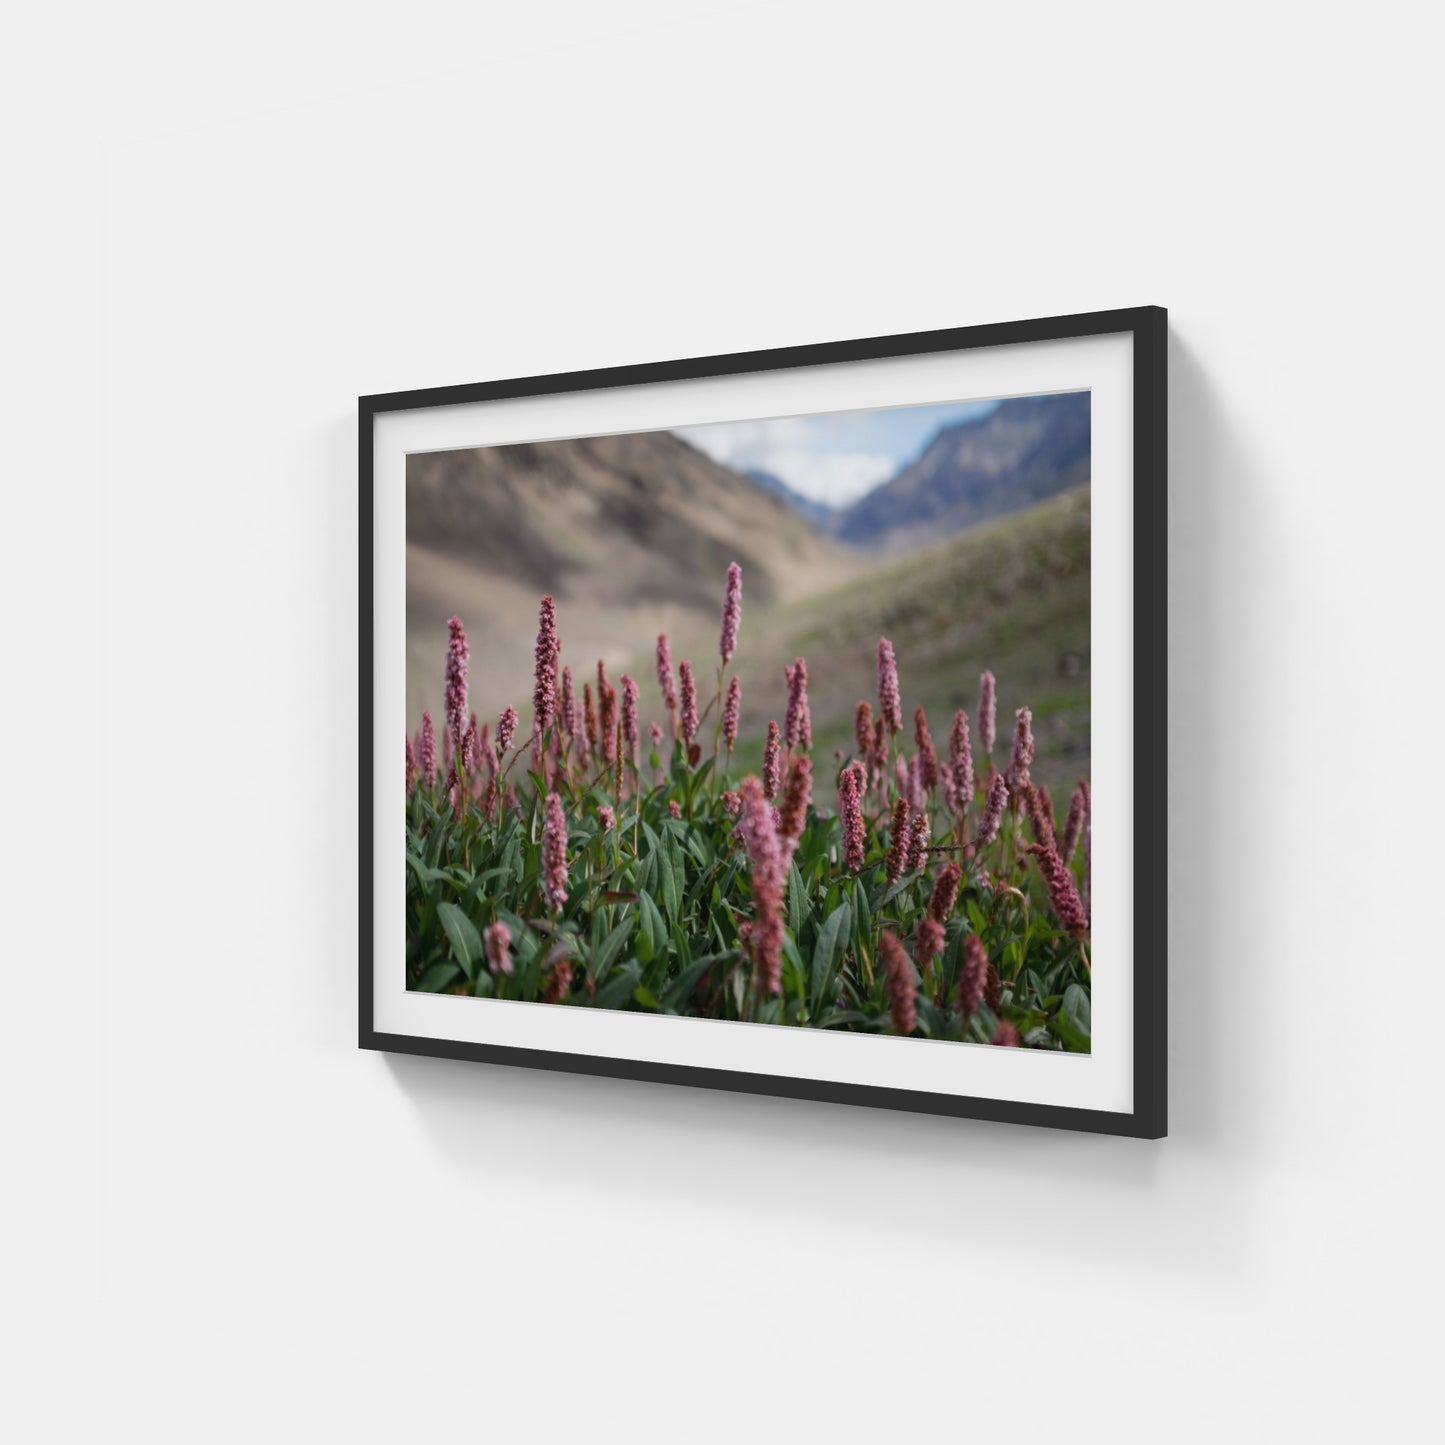 Flower of Himalaya – altitude 4800m